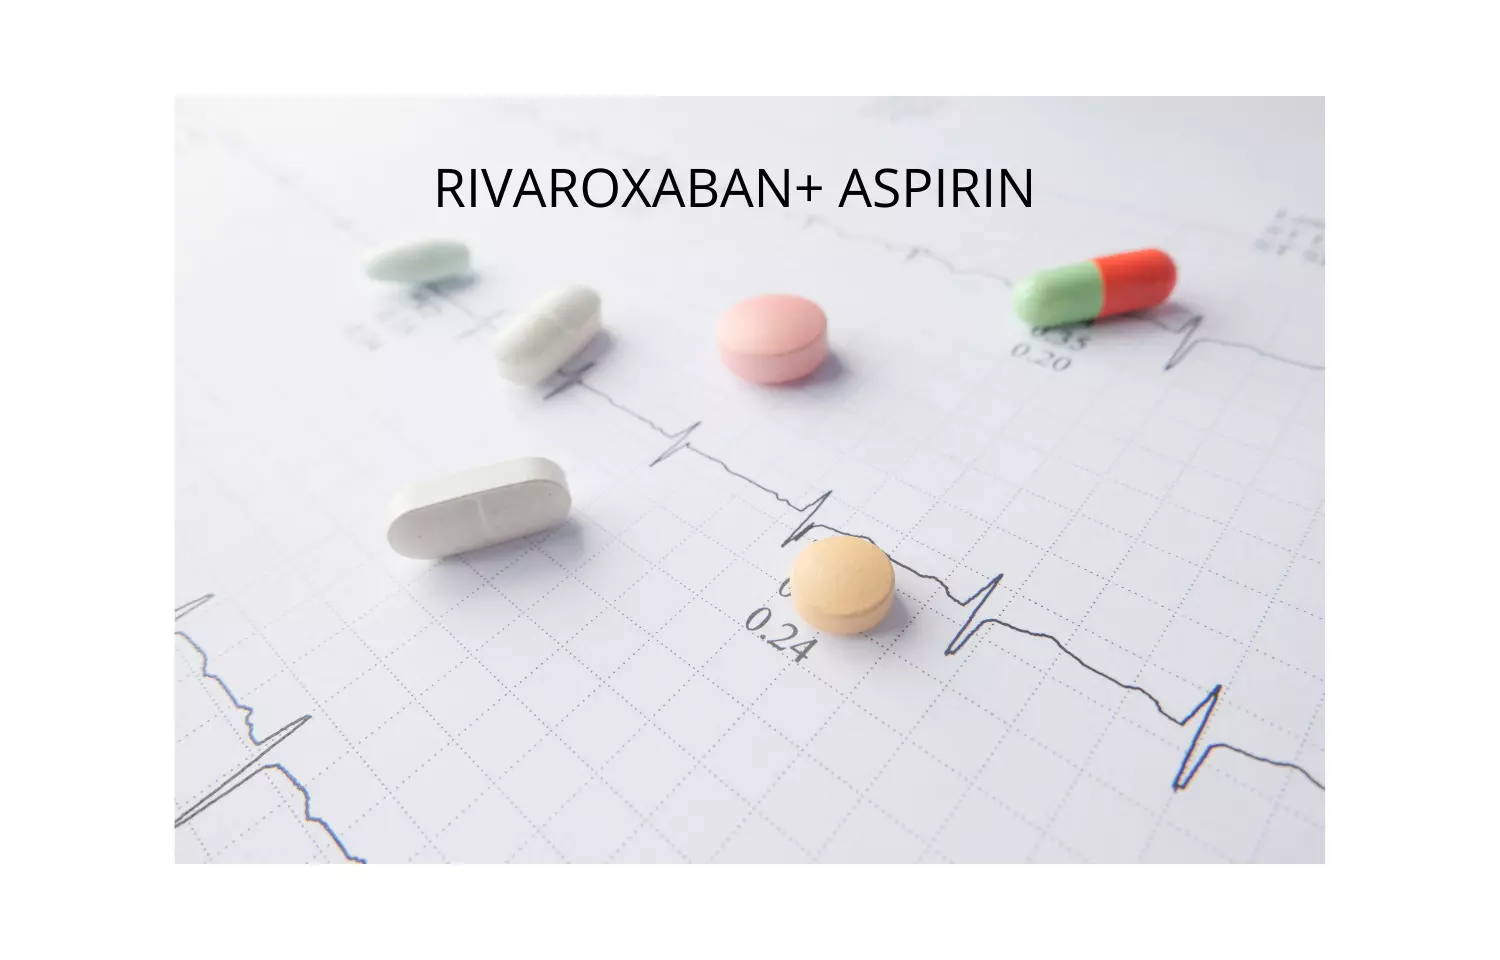 Rivaroxaban and aspirin combo improves CV outcomes in stable ASCVD: COMPASS Trial